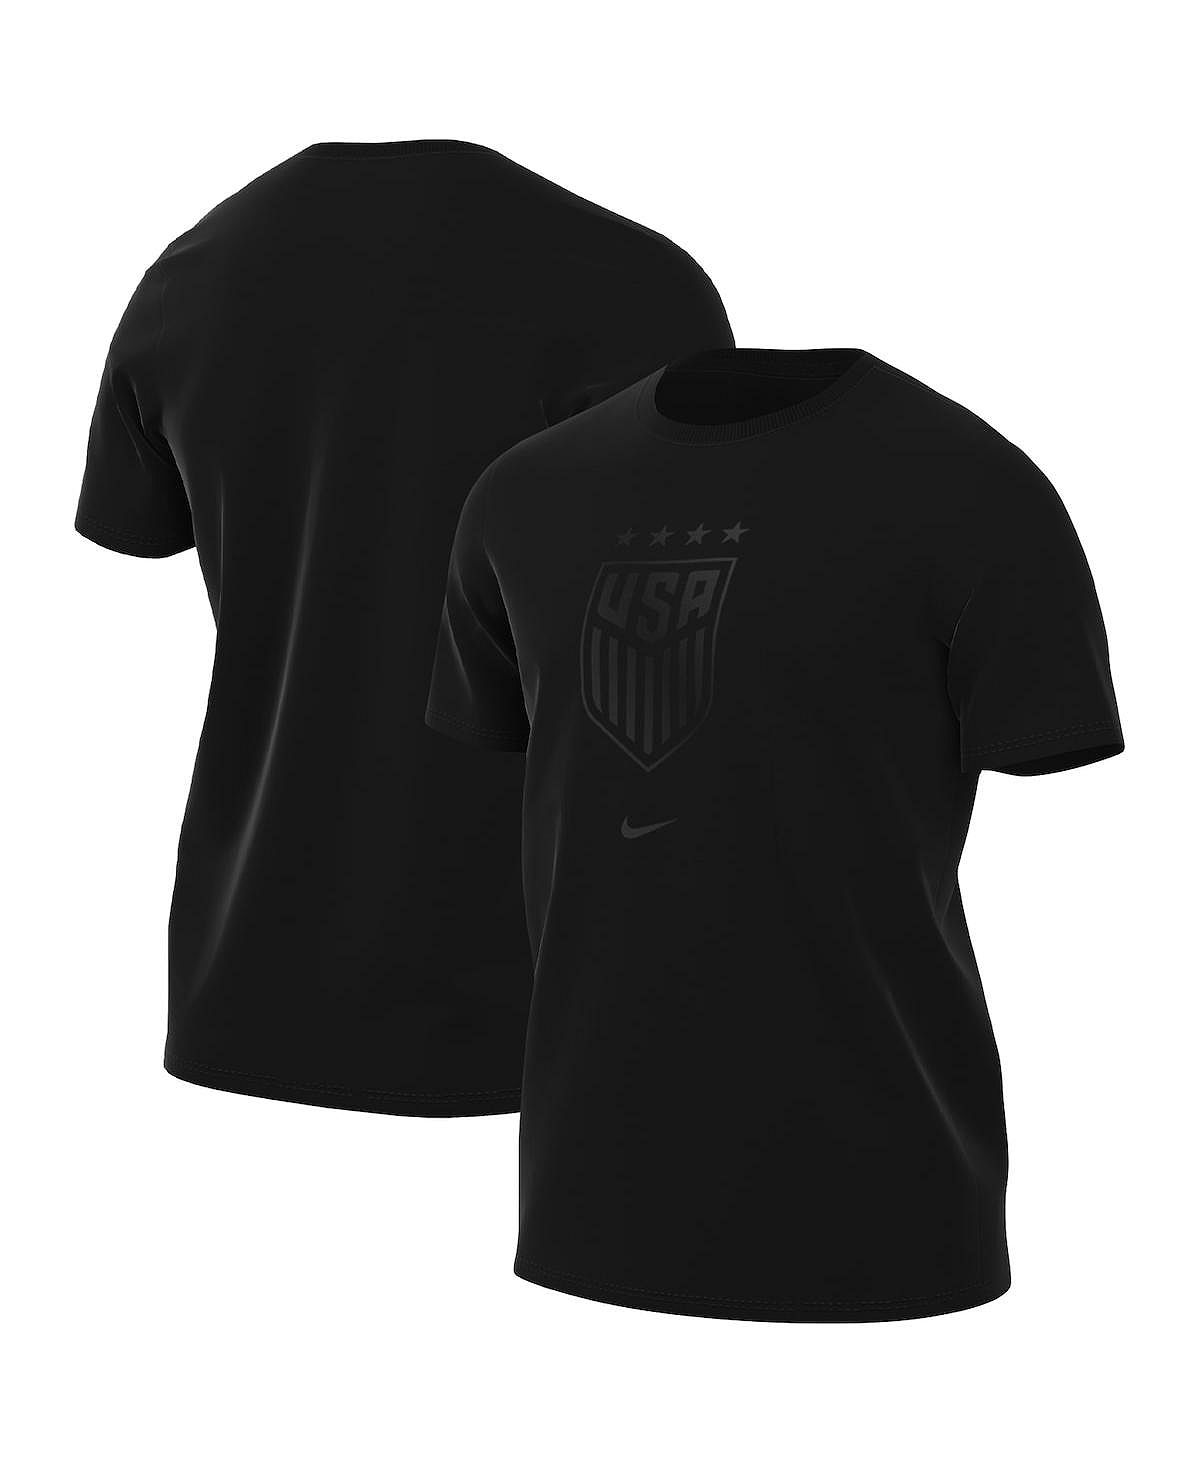 Мужская черная футболка с гербом USWNT Nike фляжка с гербом черная